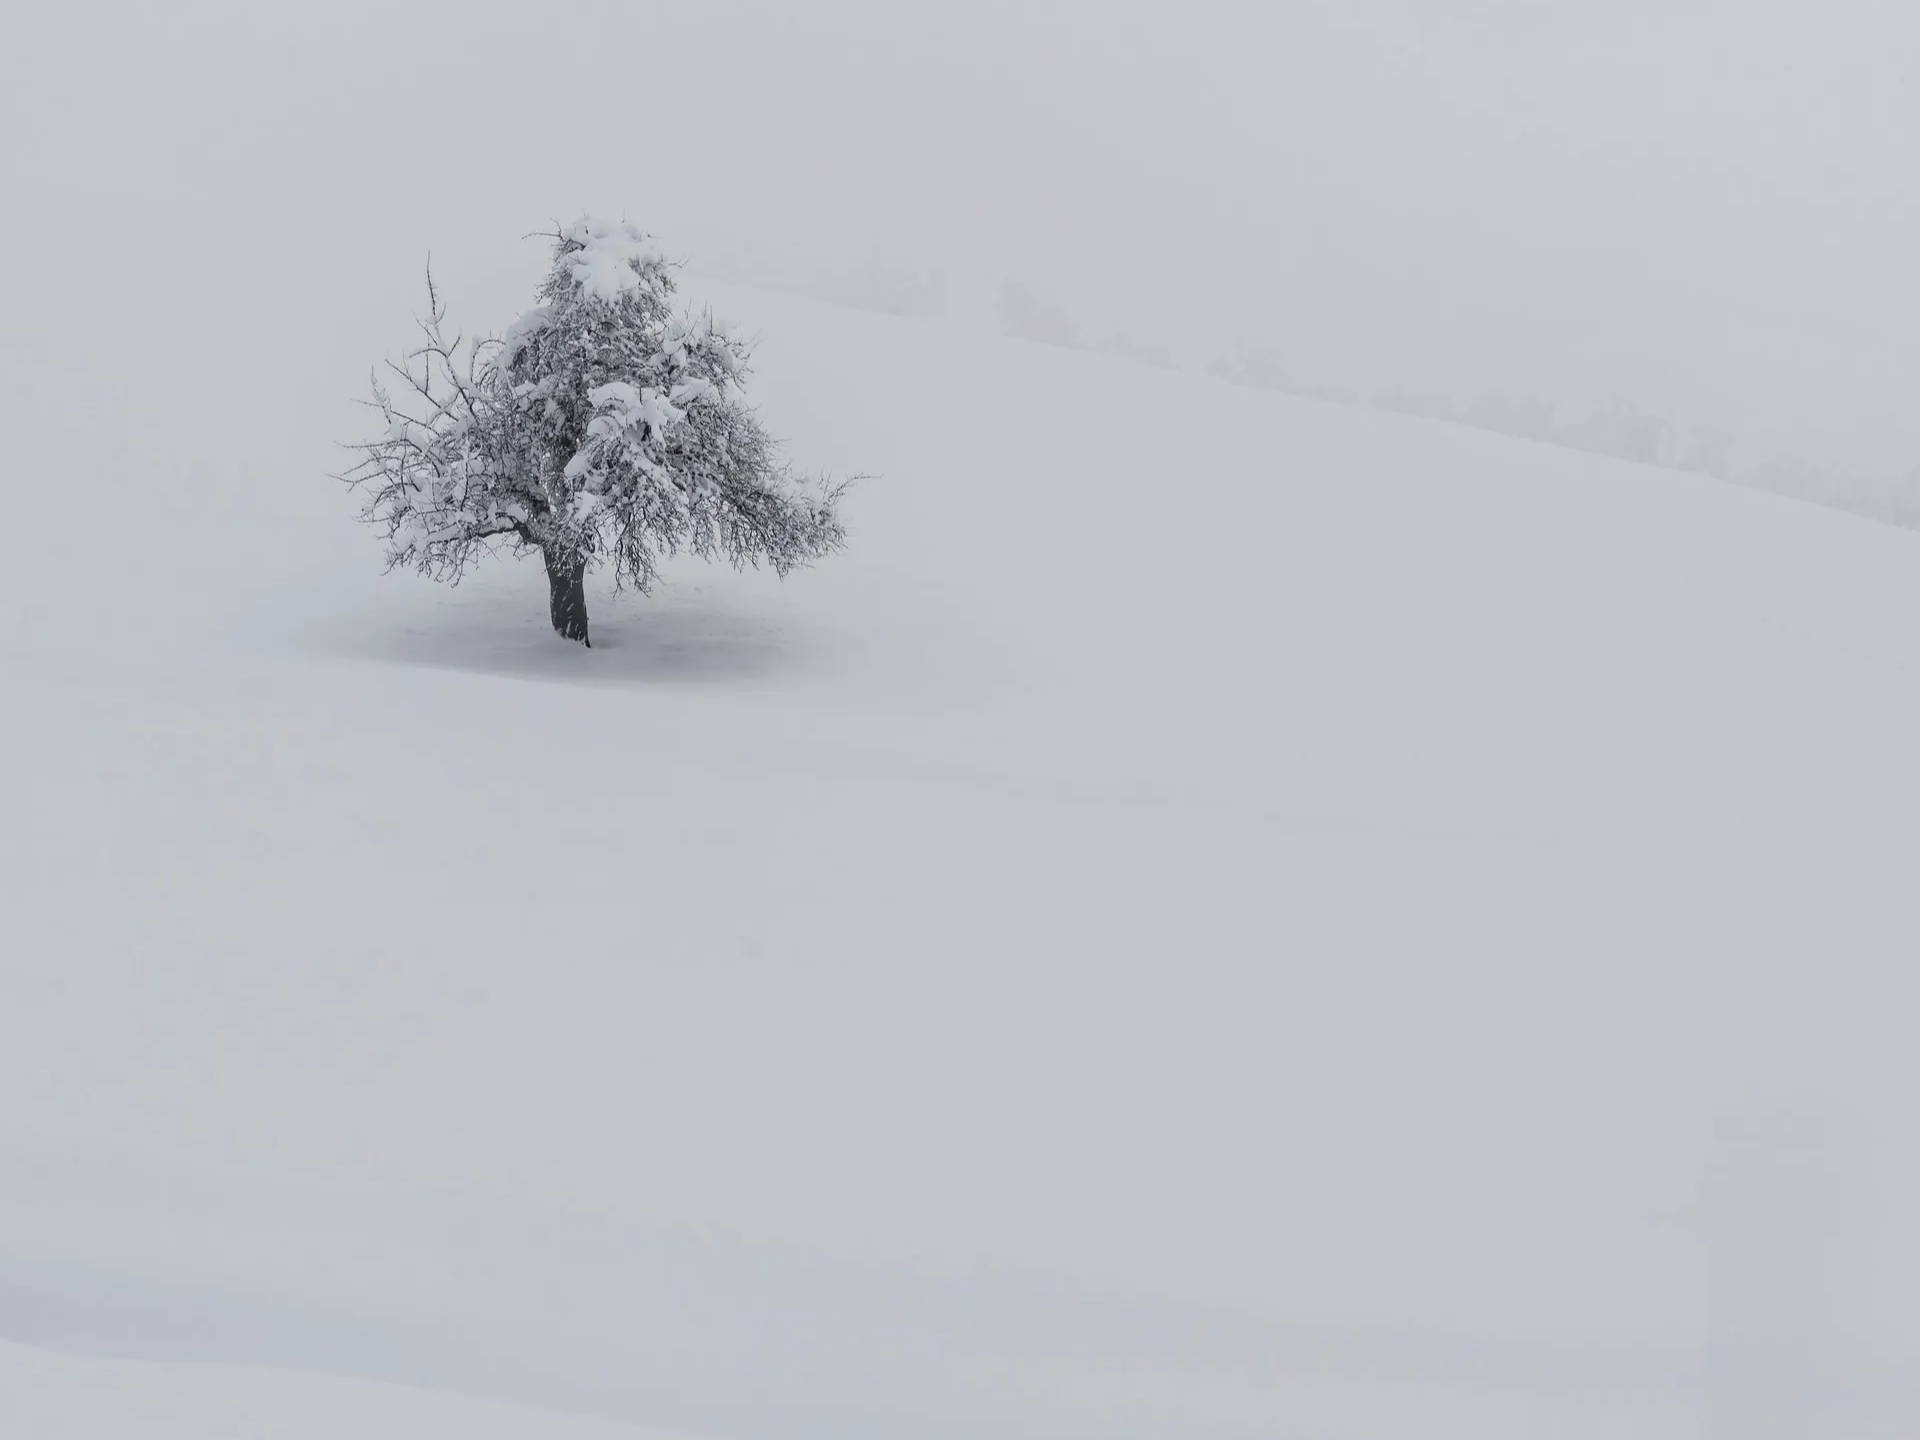 A tree amidst snow